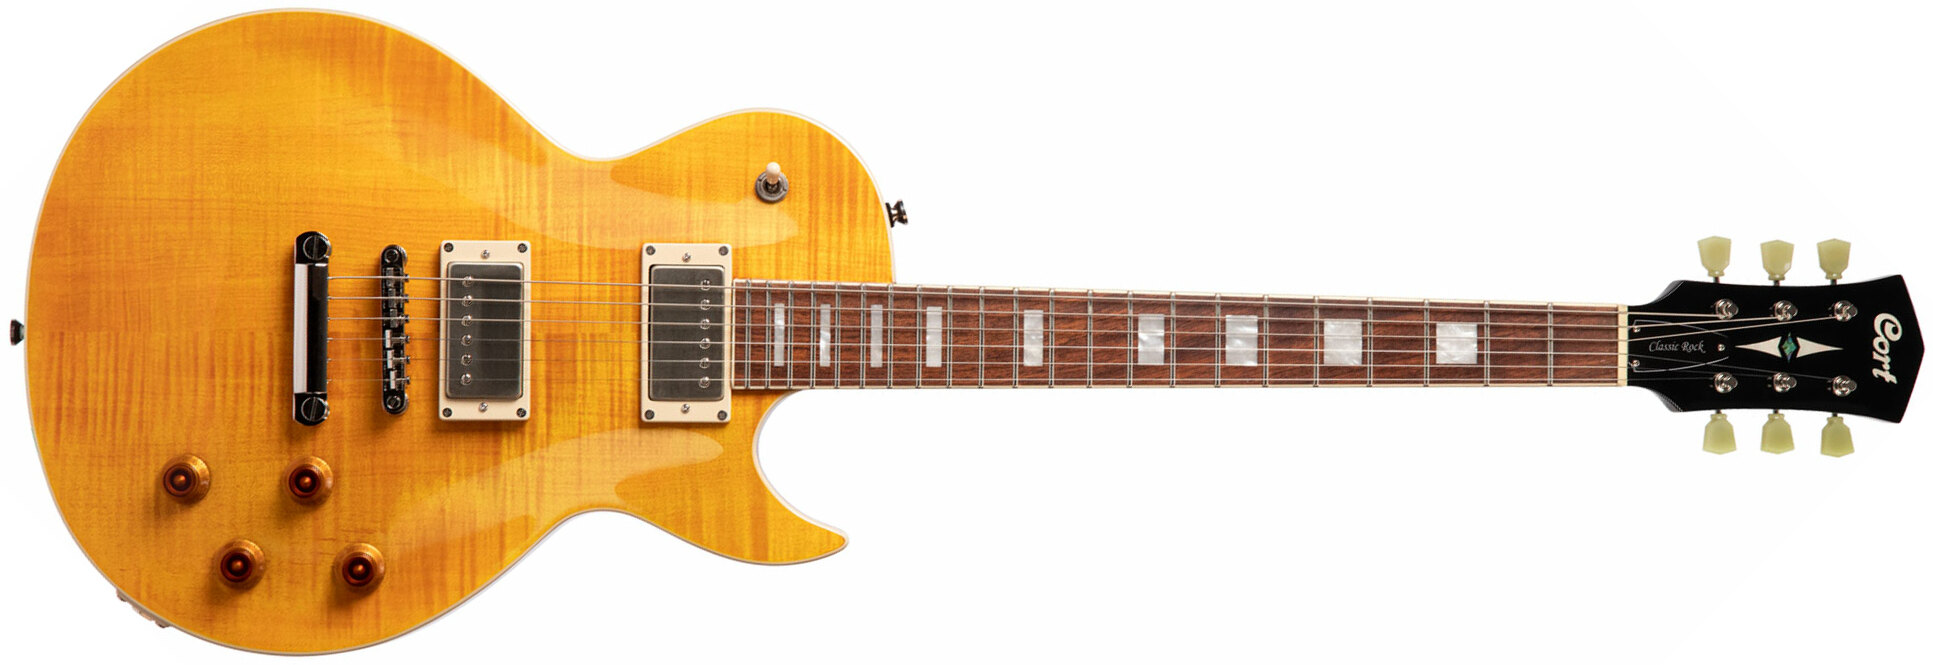 Cort Cr250 Ata Classic Rock Ht Hh Jat - Ambre Antique - Guitarra eléctrica de corte único. - Main picture